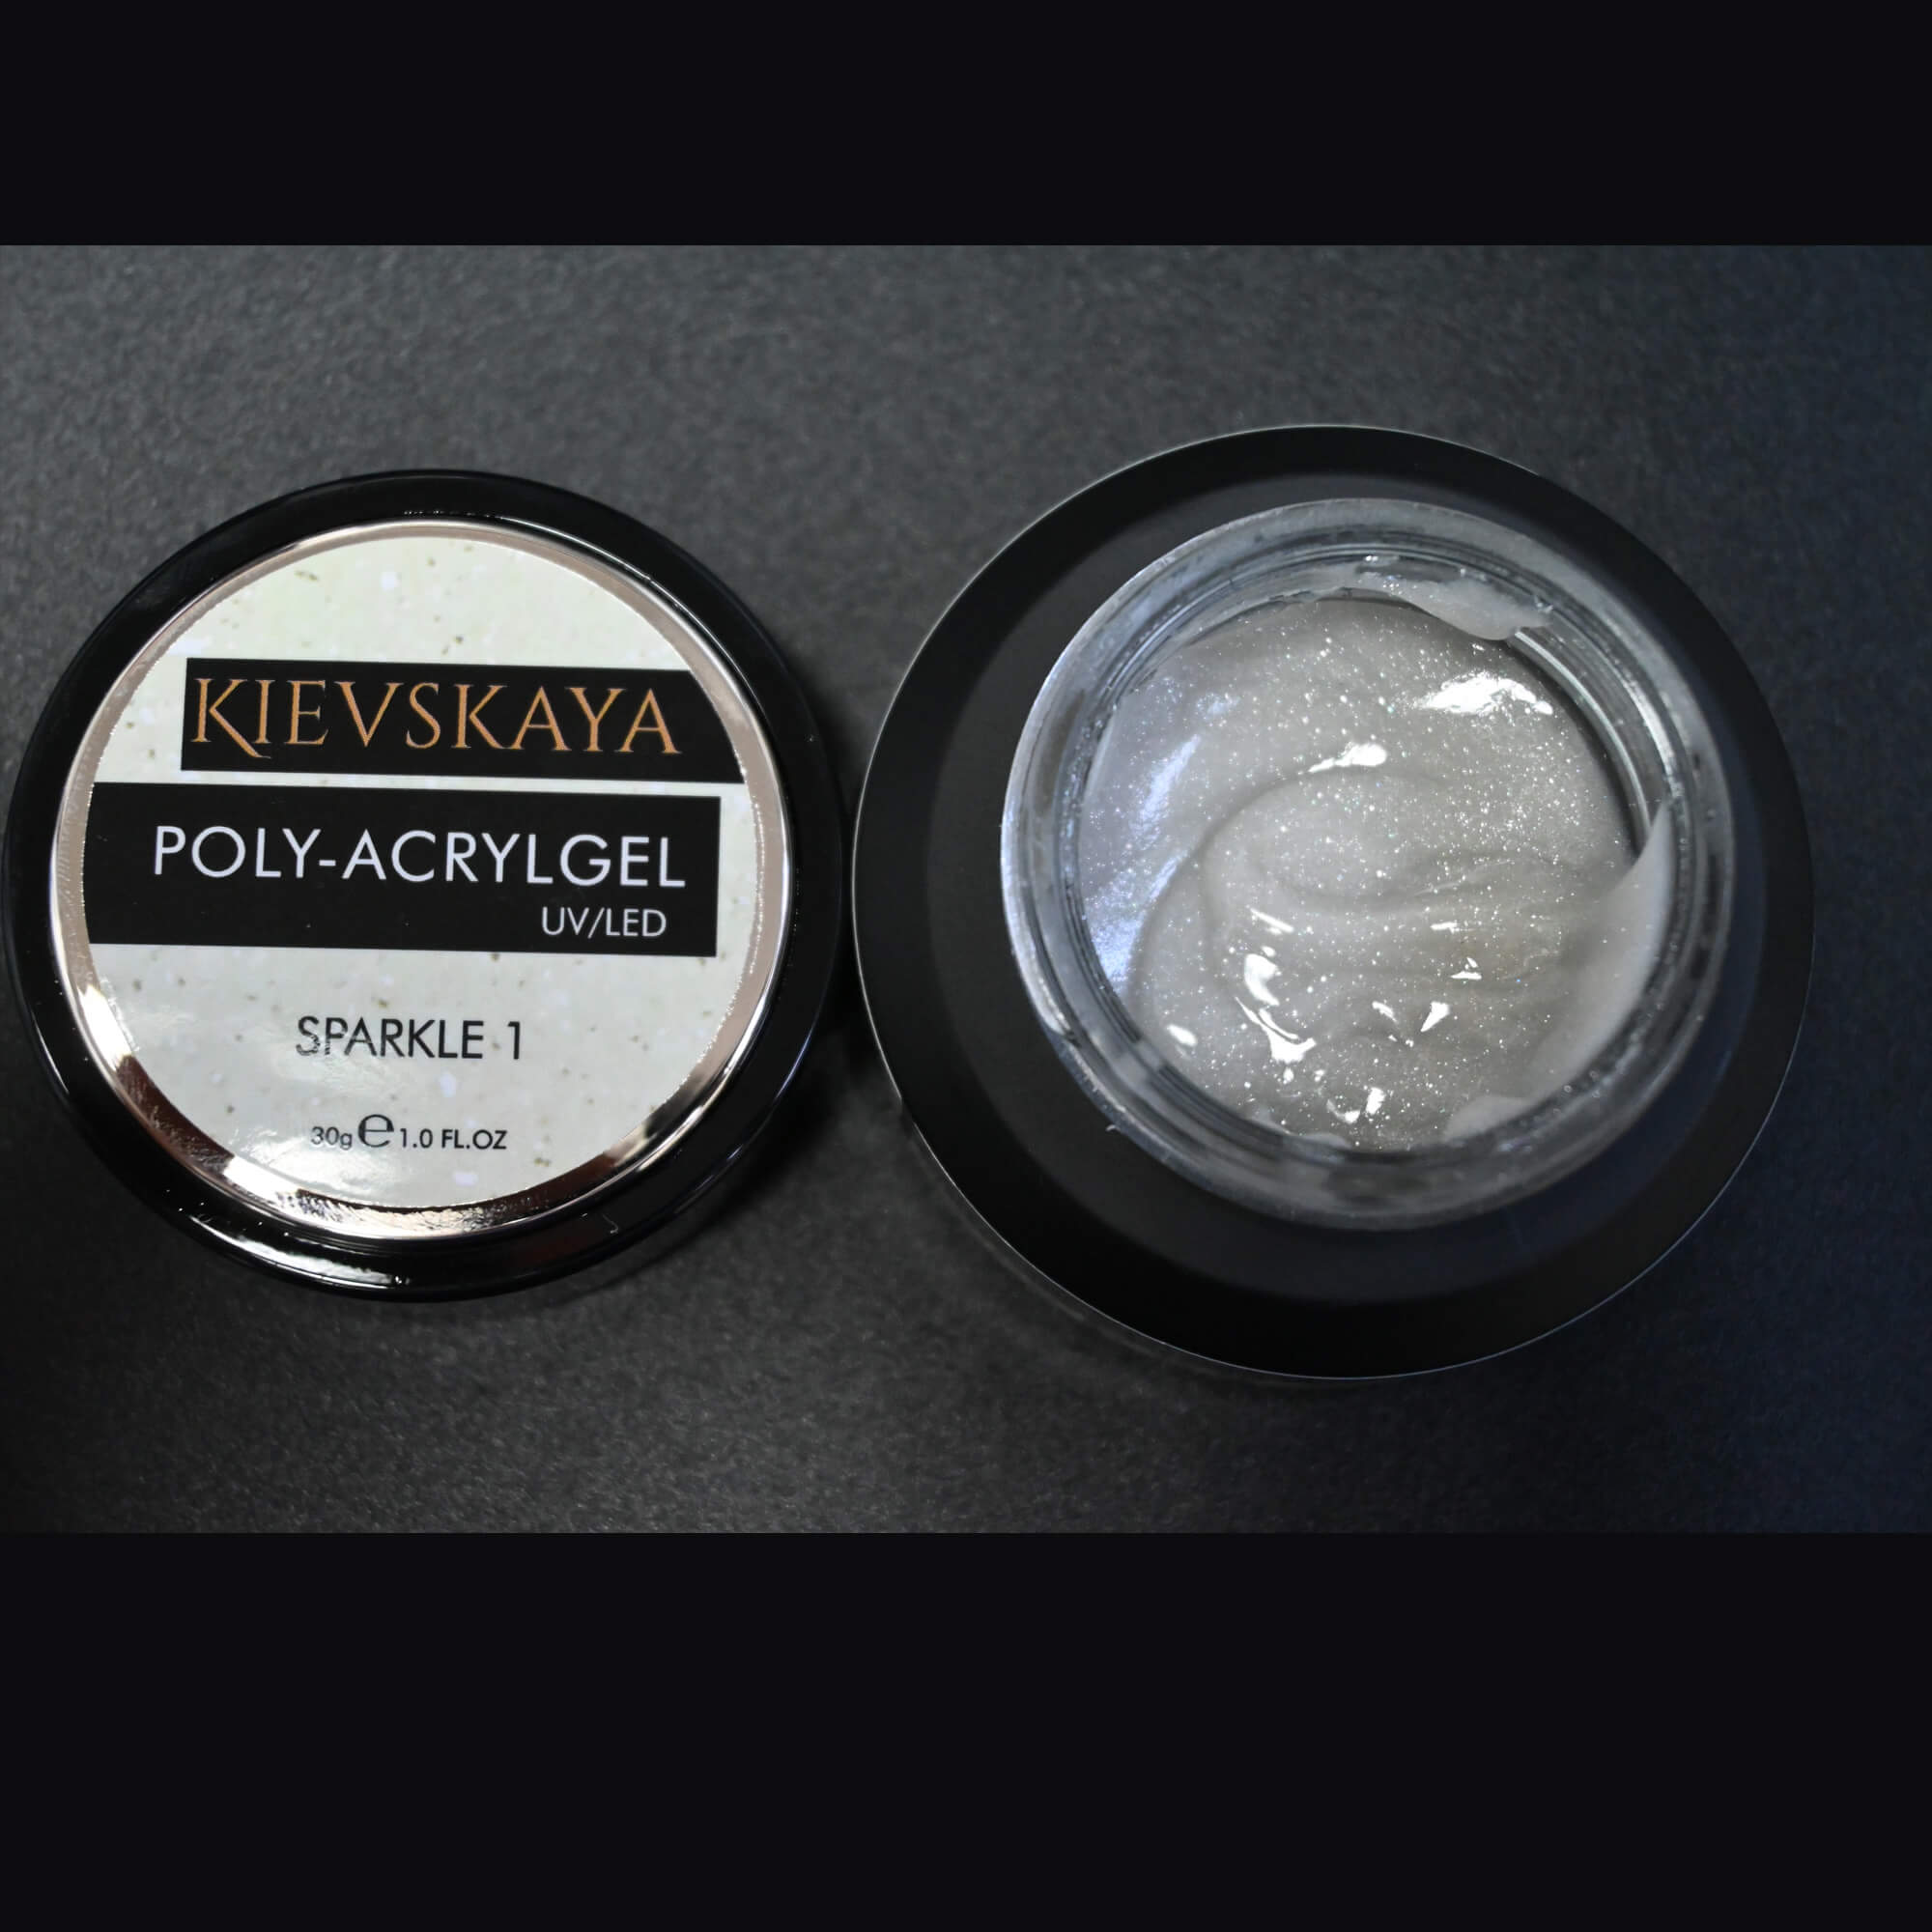 Poly-Acrylgel Sparkle Kievskaya 30gr-SPARKLE01 - SPARKLE01 - Everin.ro